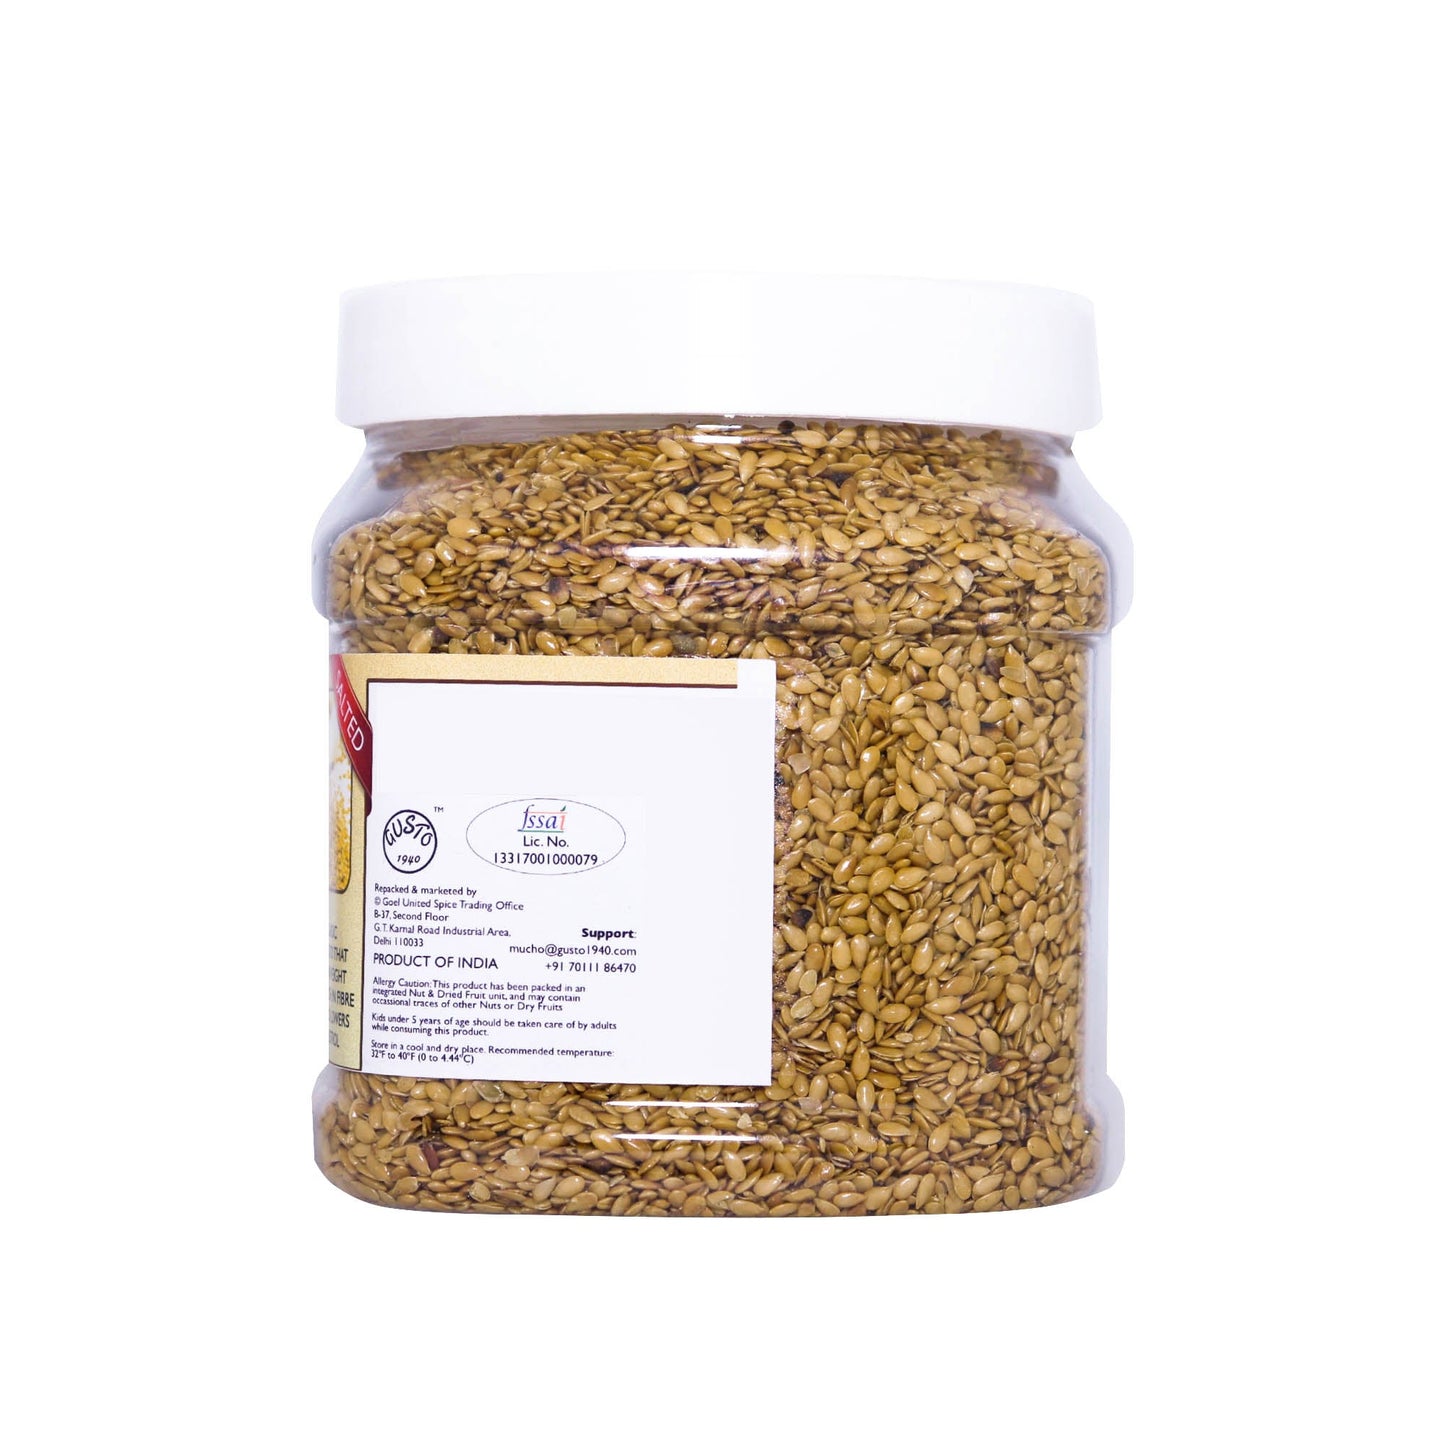 Roasted Salted Golden Flax Seed 600g Jar - Tassyam Organics